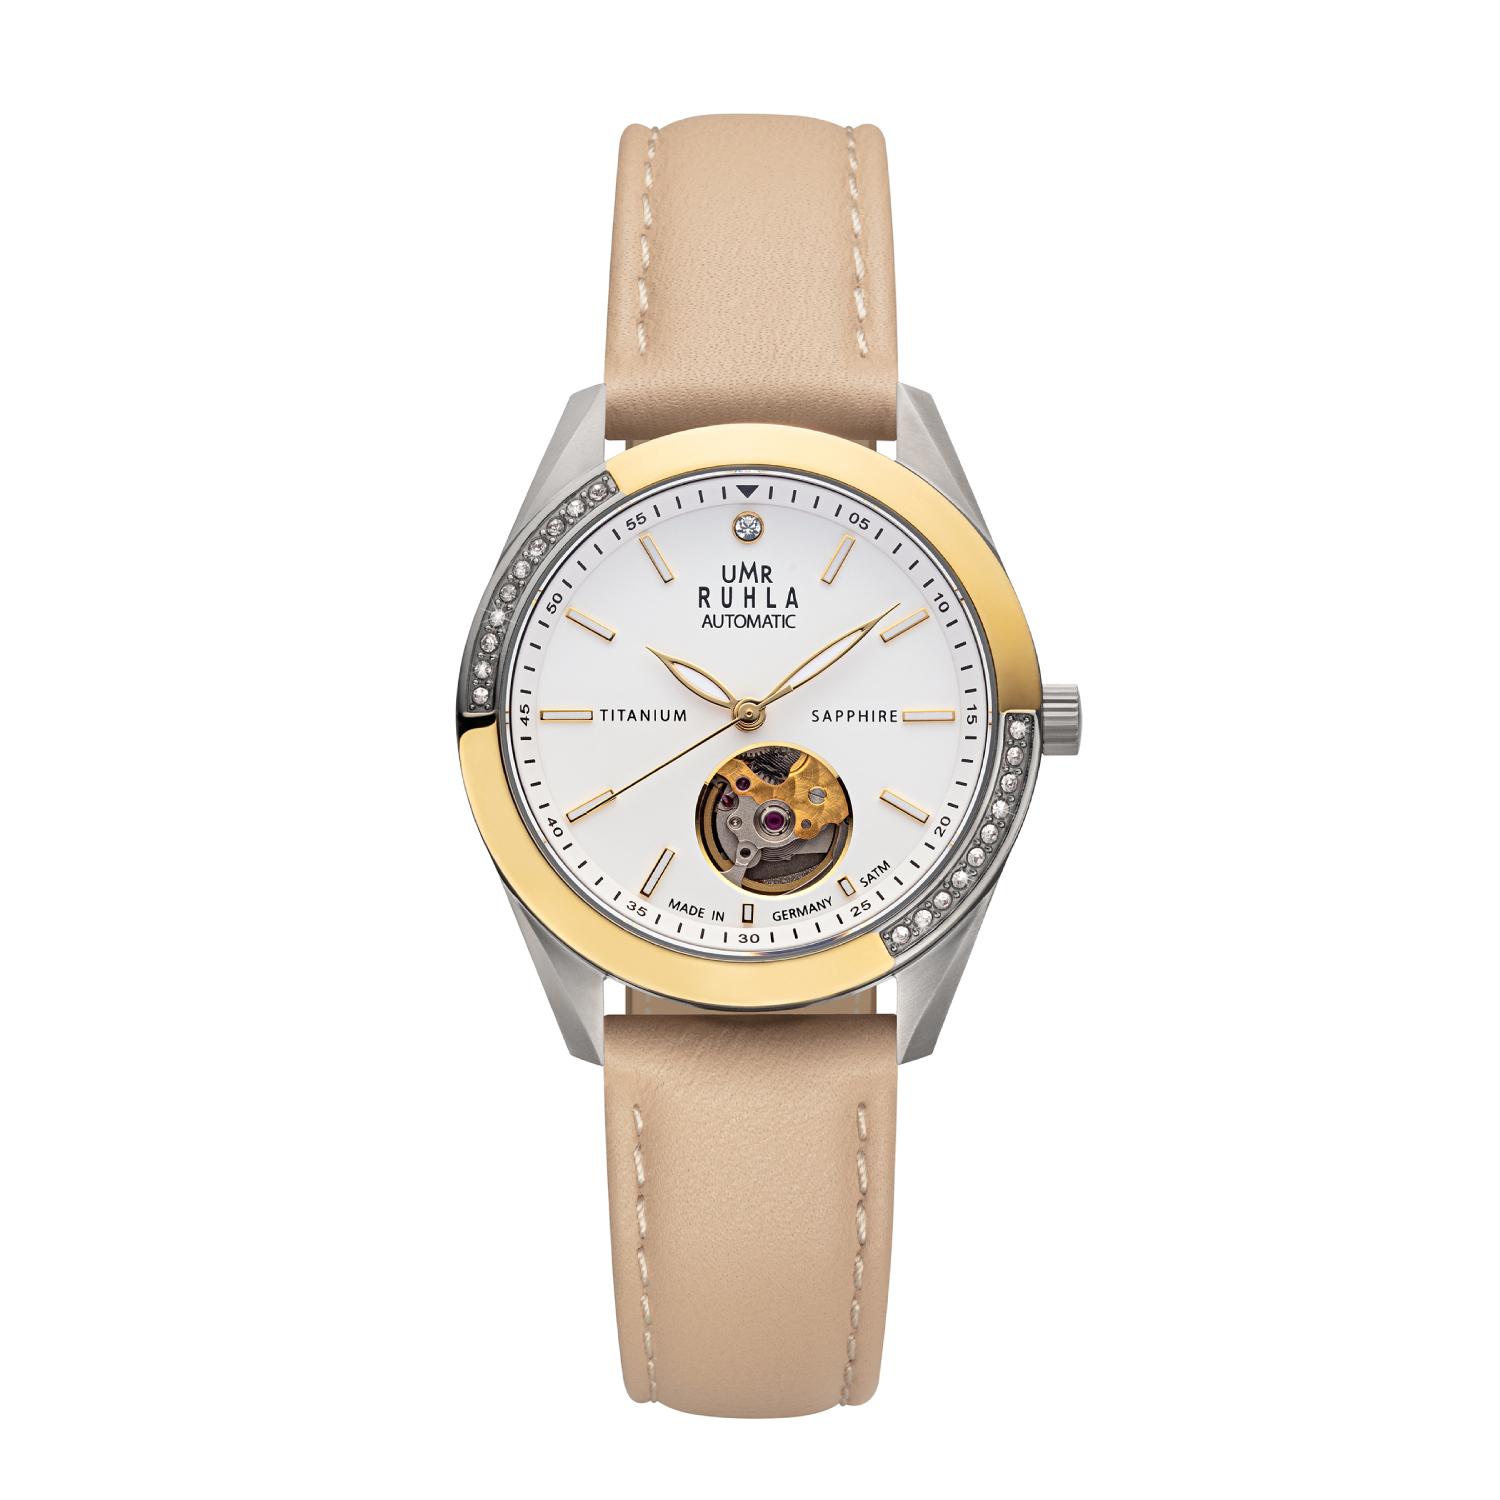 Uhren Manufaktur Ruhla - automatic wristwatch - beige leather strap